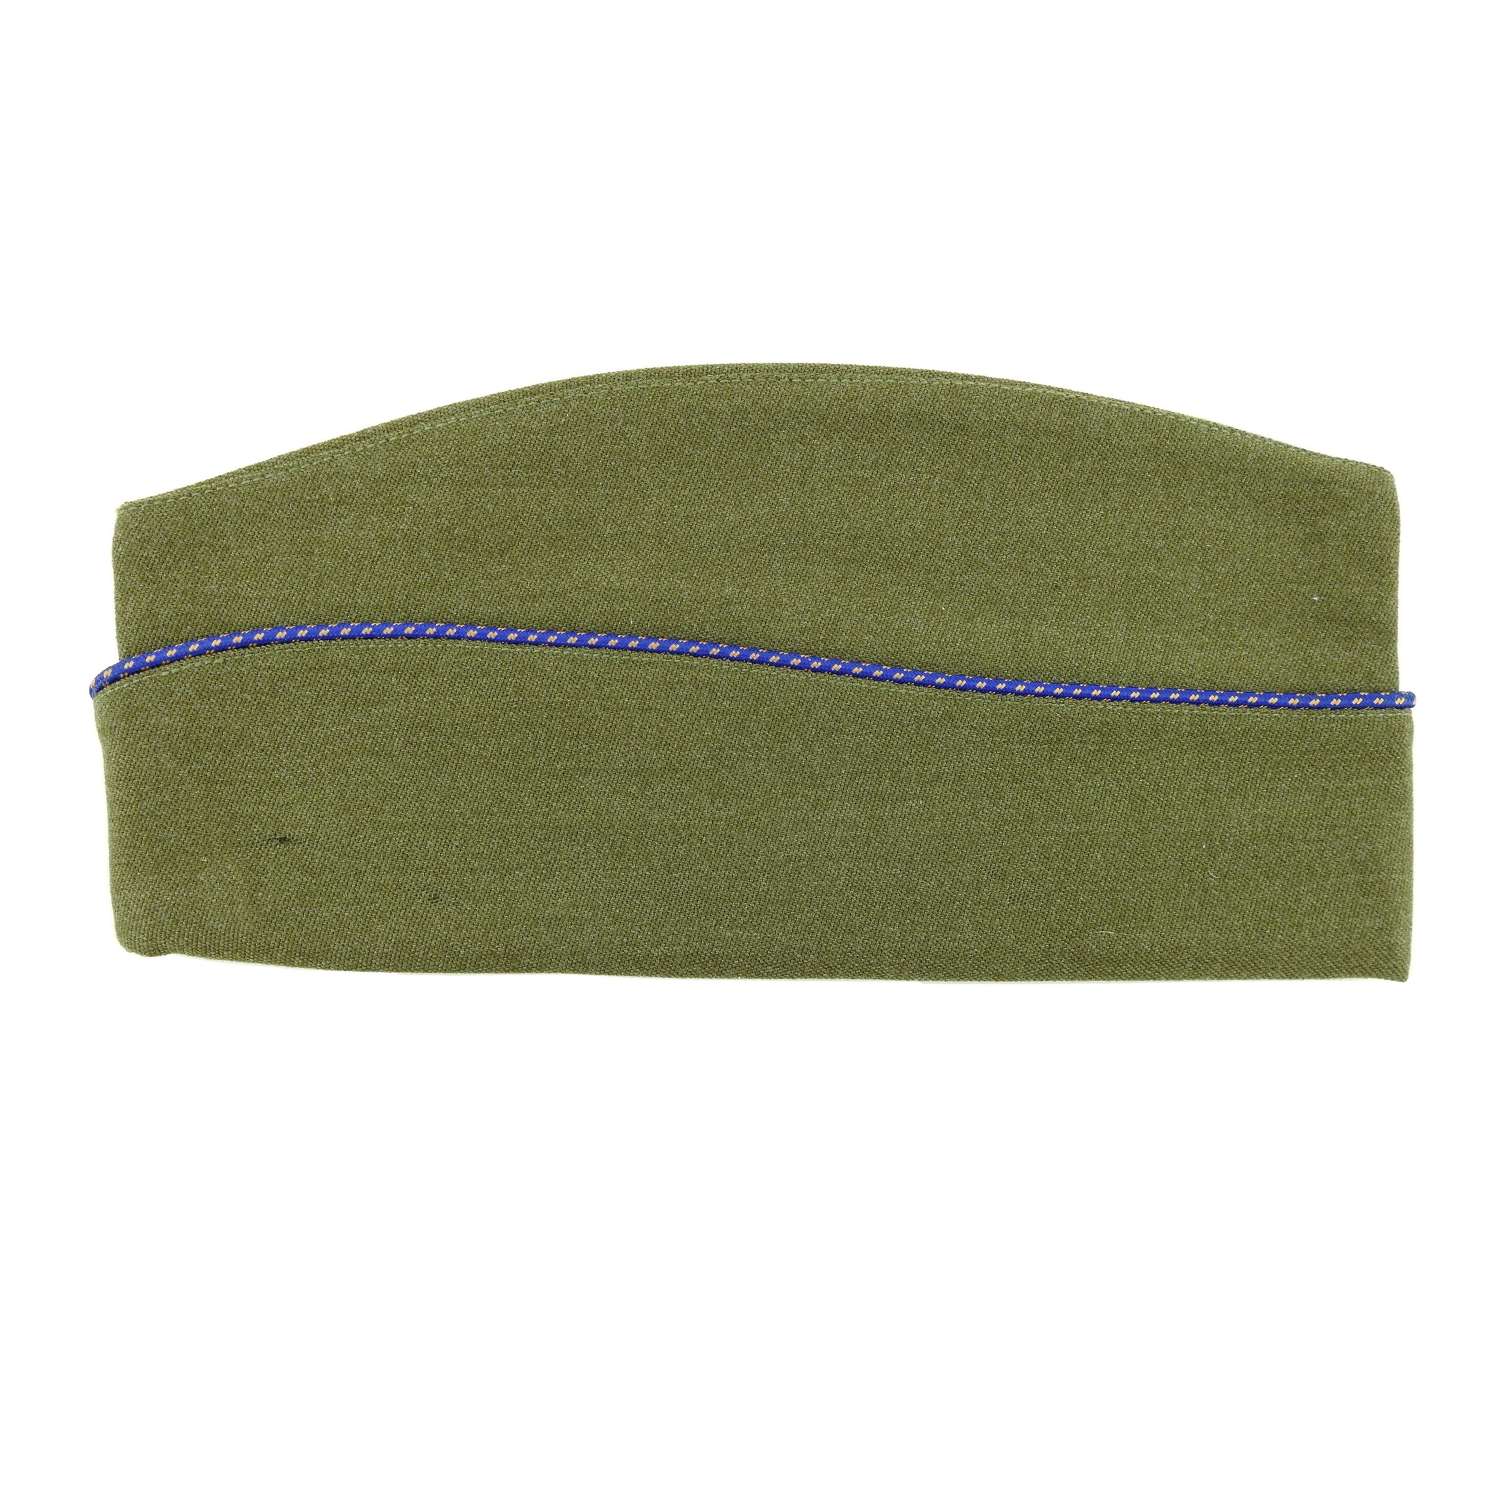 USAAF English made garrison cap